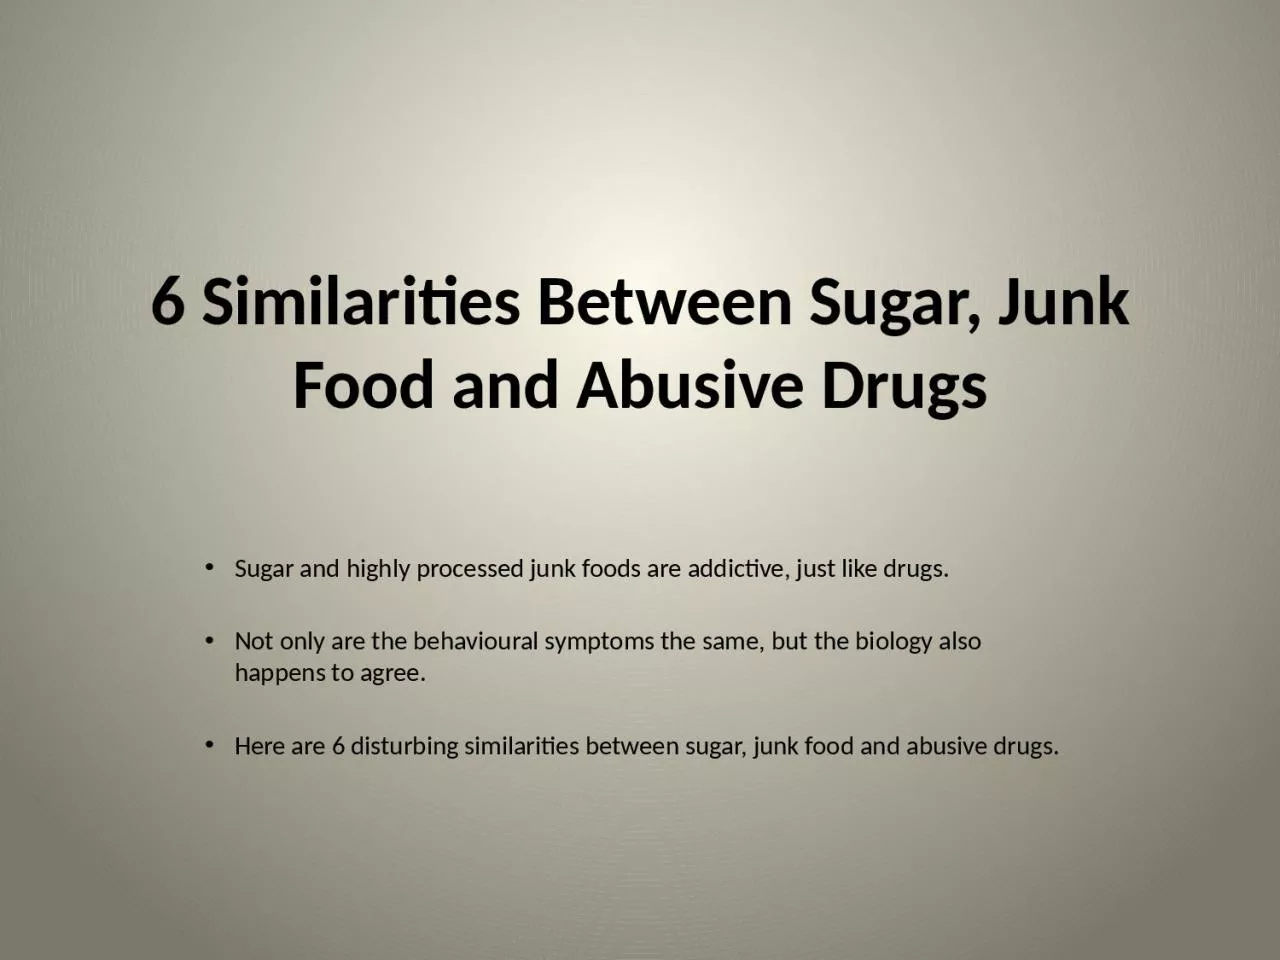 6 Similarities Between Sugar, Junk Food and Abusive Drugs